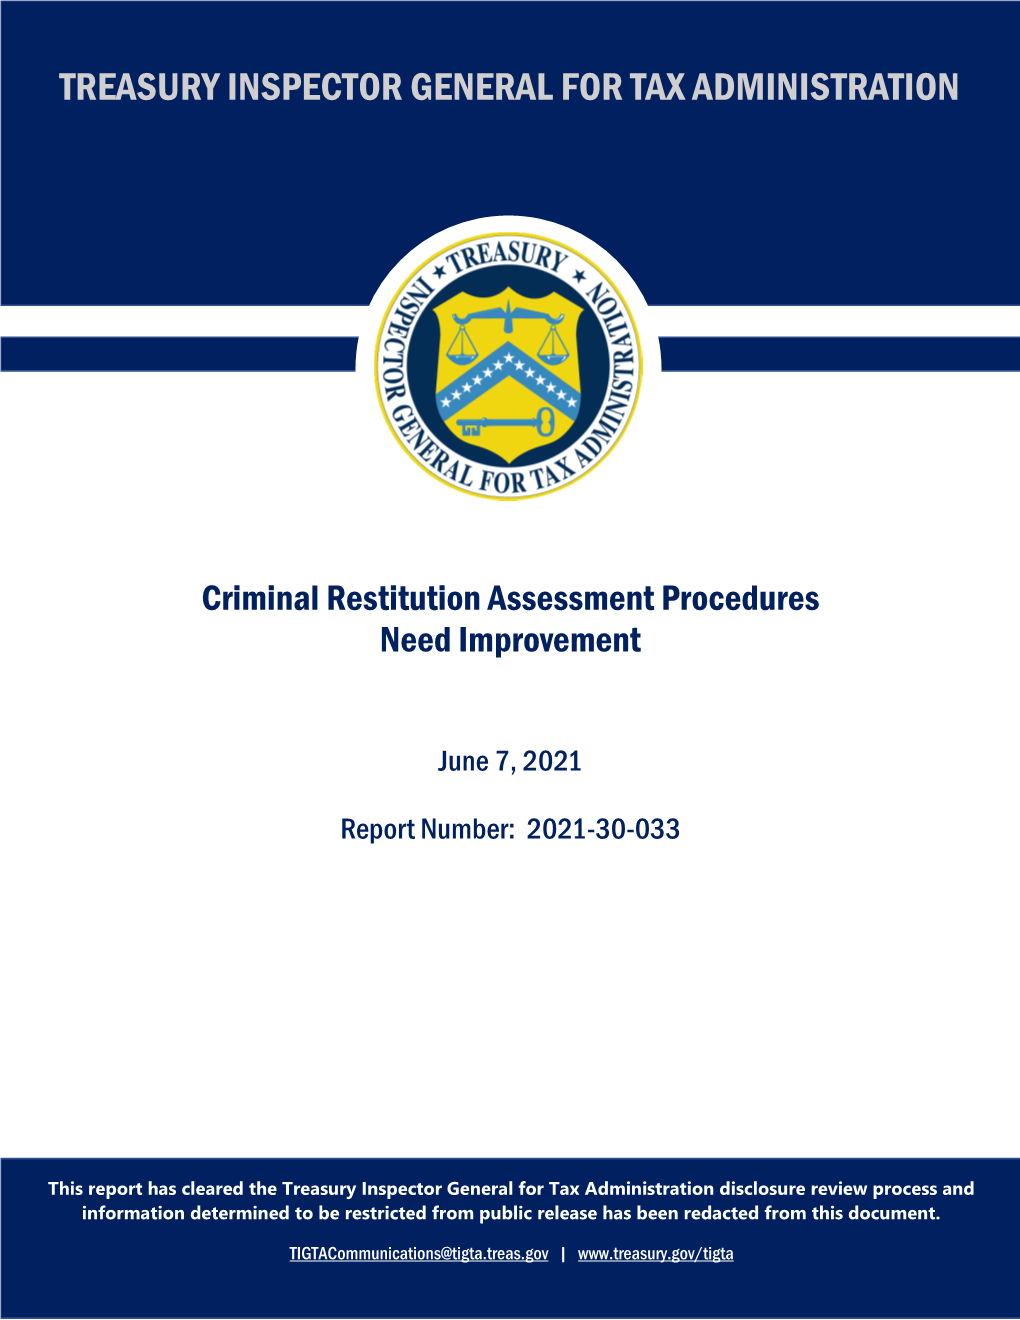 Criminal Restitution Assessment Procedures Need Improvement